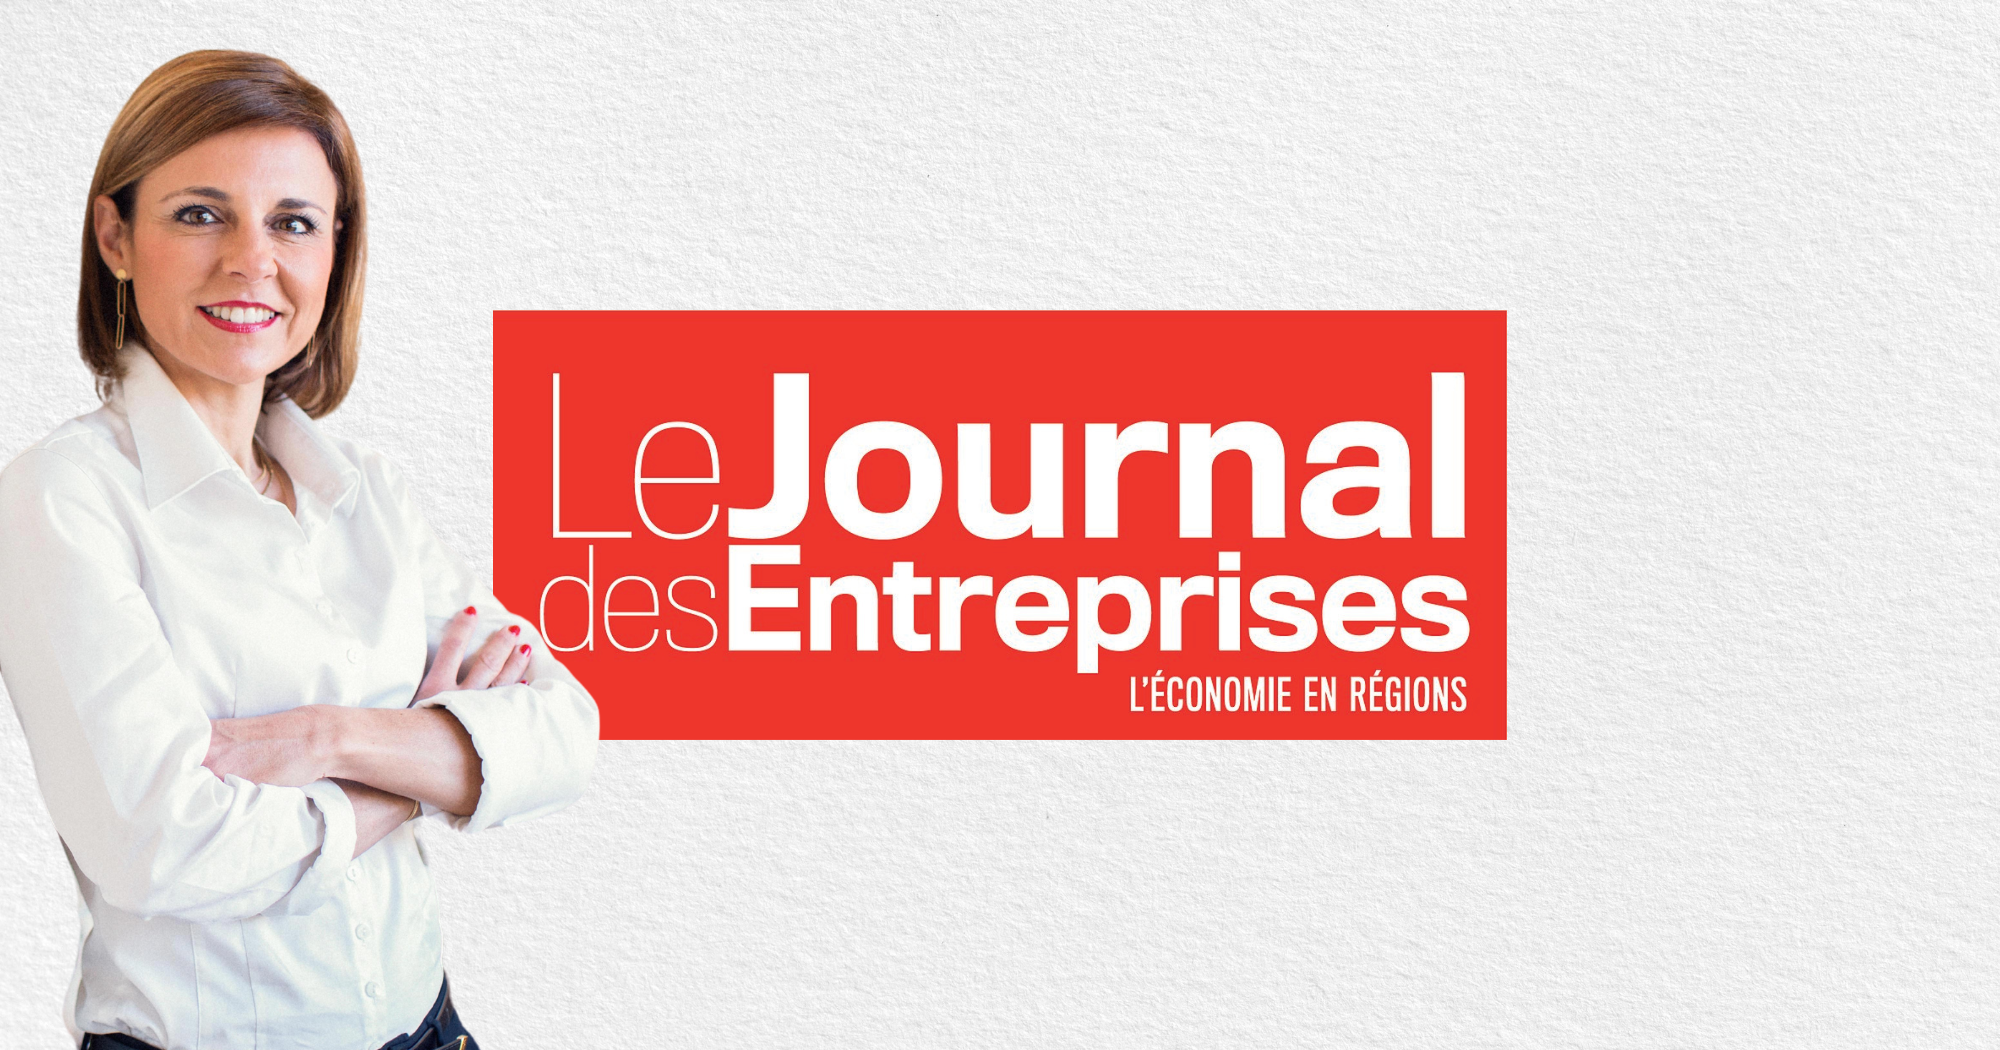 Chavin - Chavin: Featured in Le Journal des Entreprises